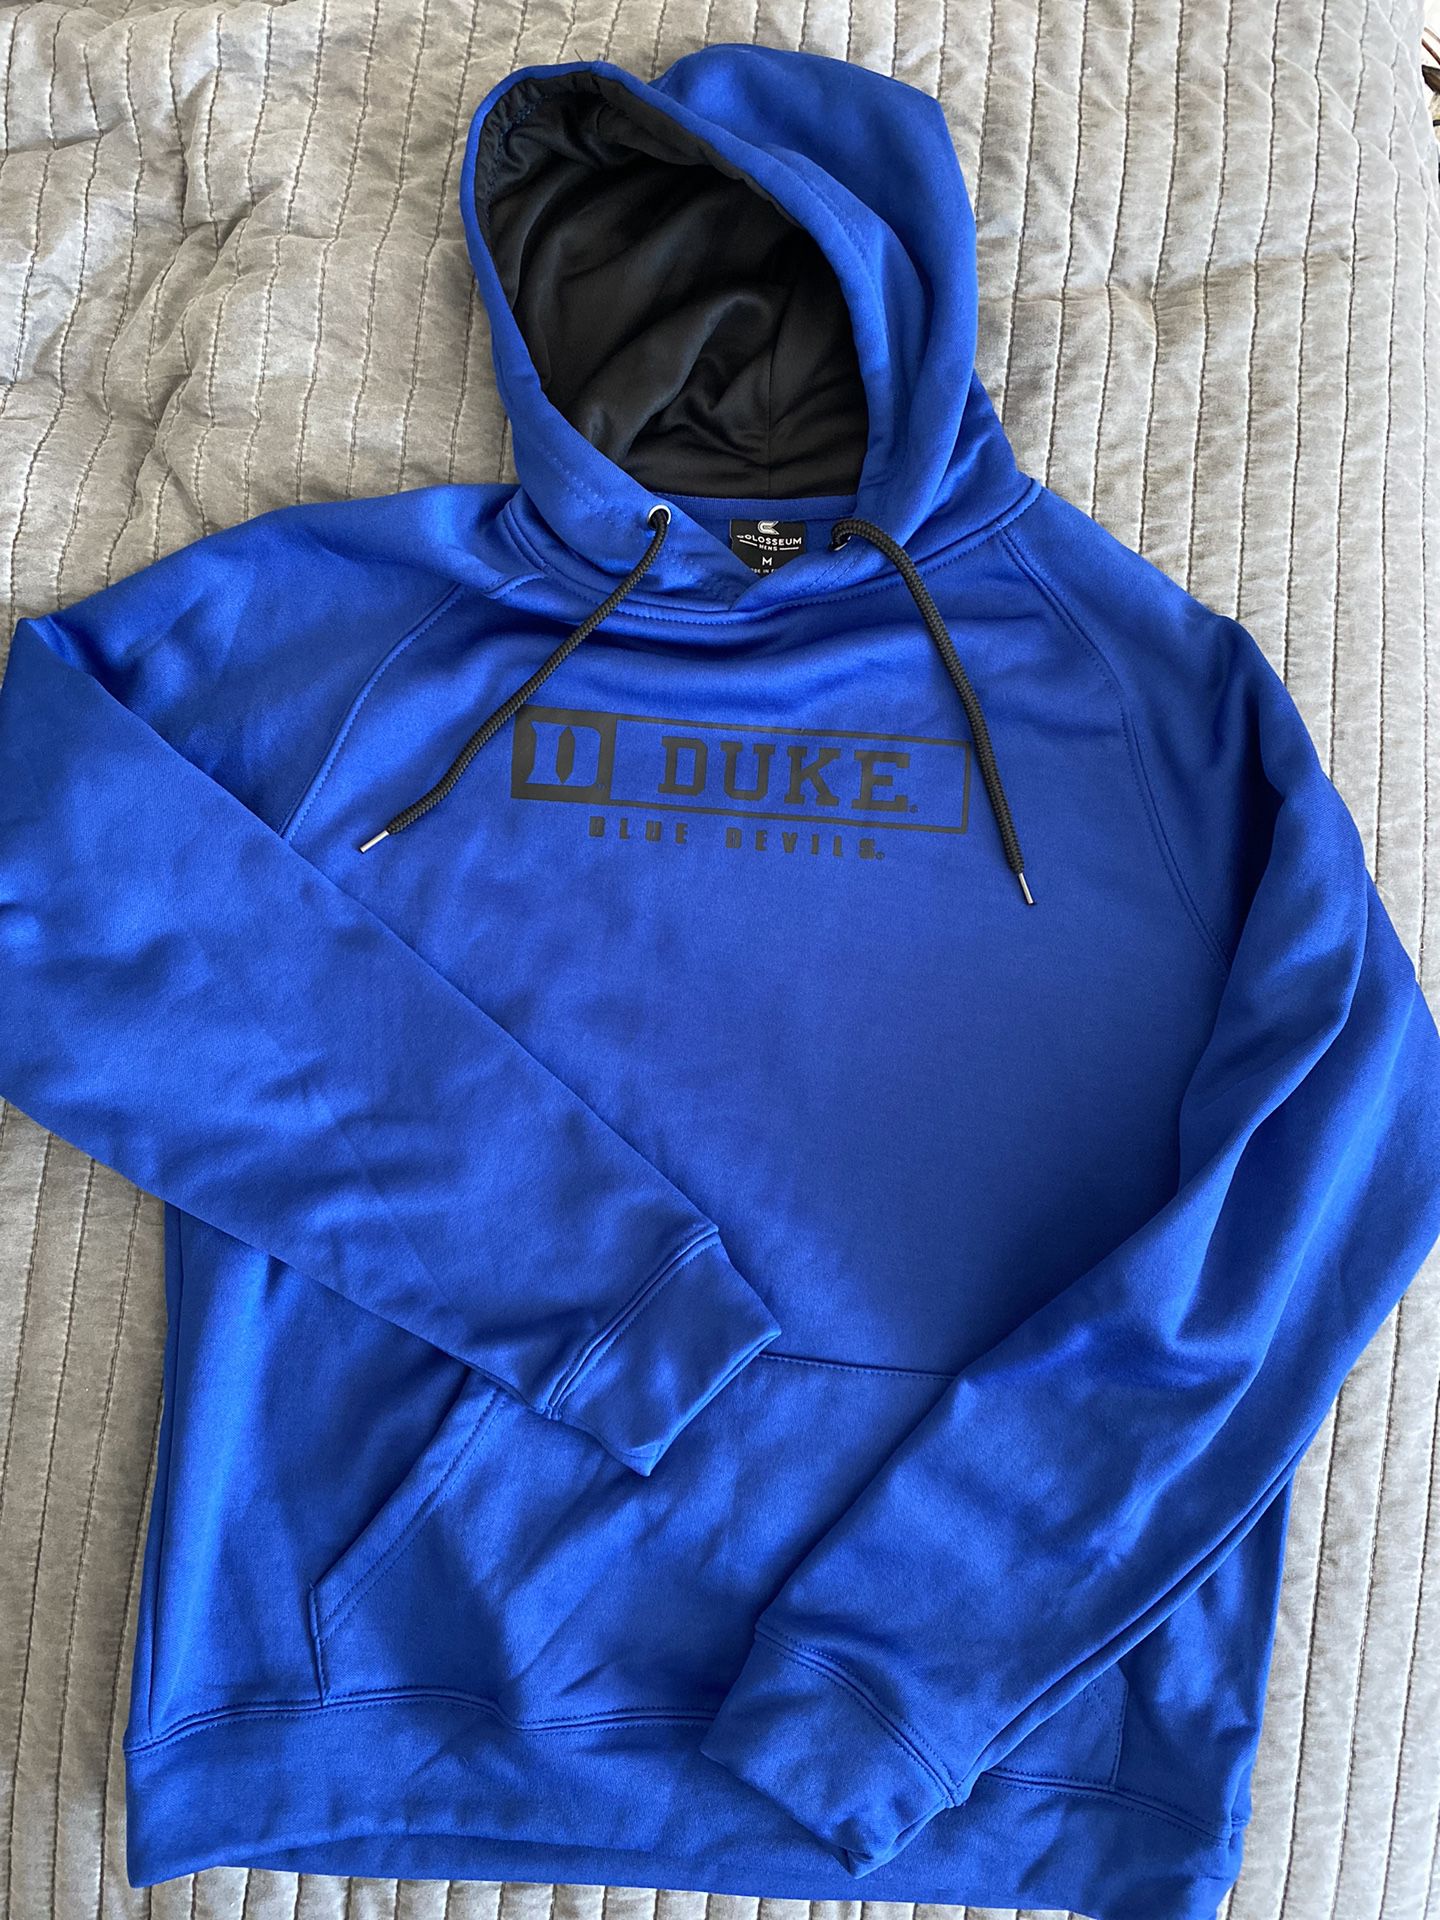 Duke University Sweatshirt. Mens Medium. Polyester Blend With Athletic Material Feel